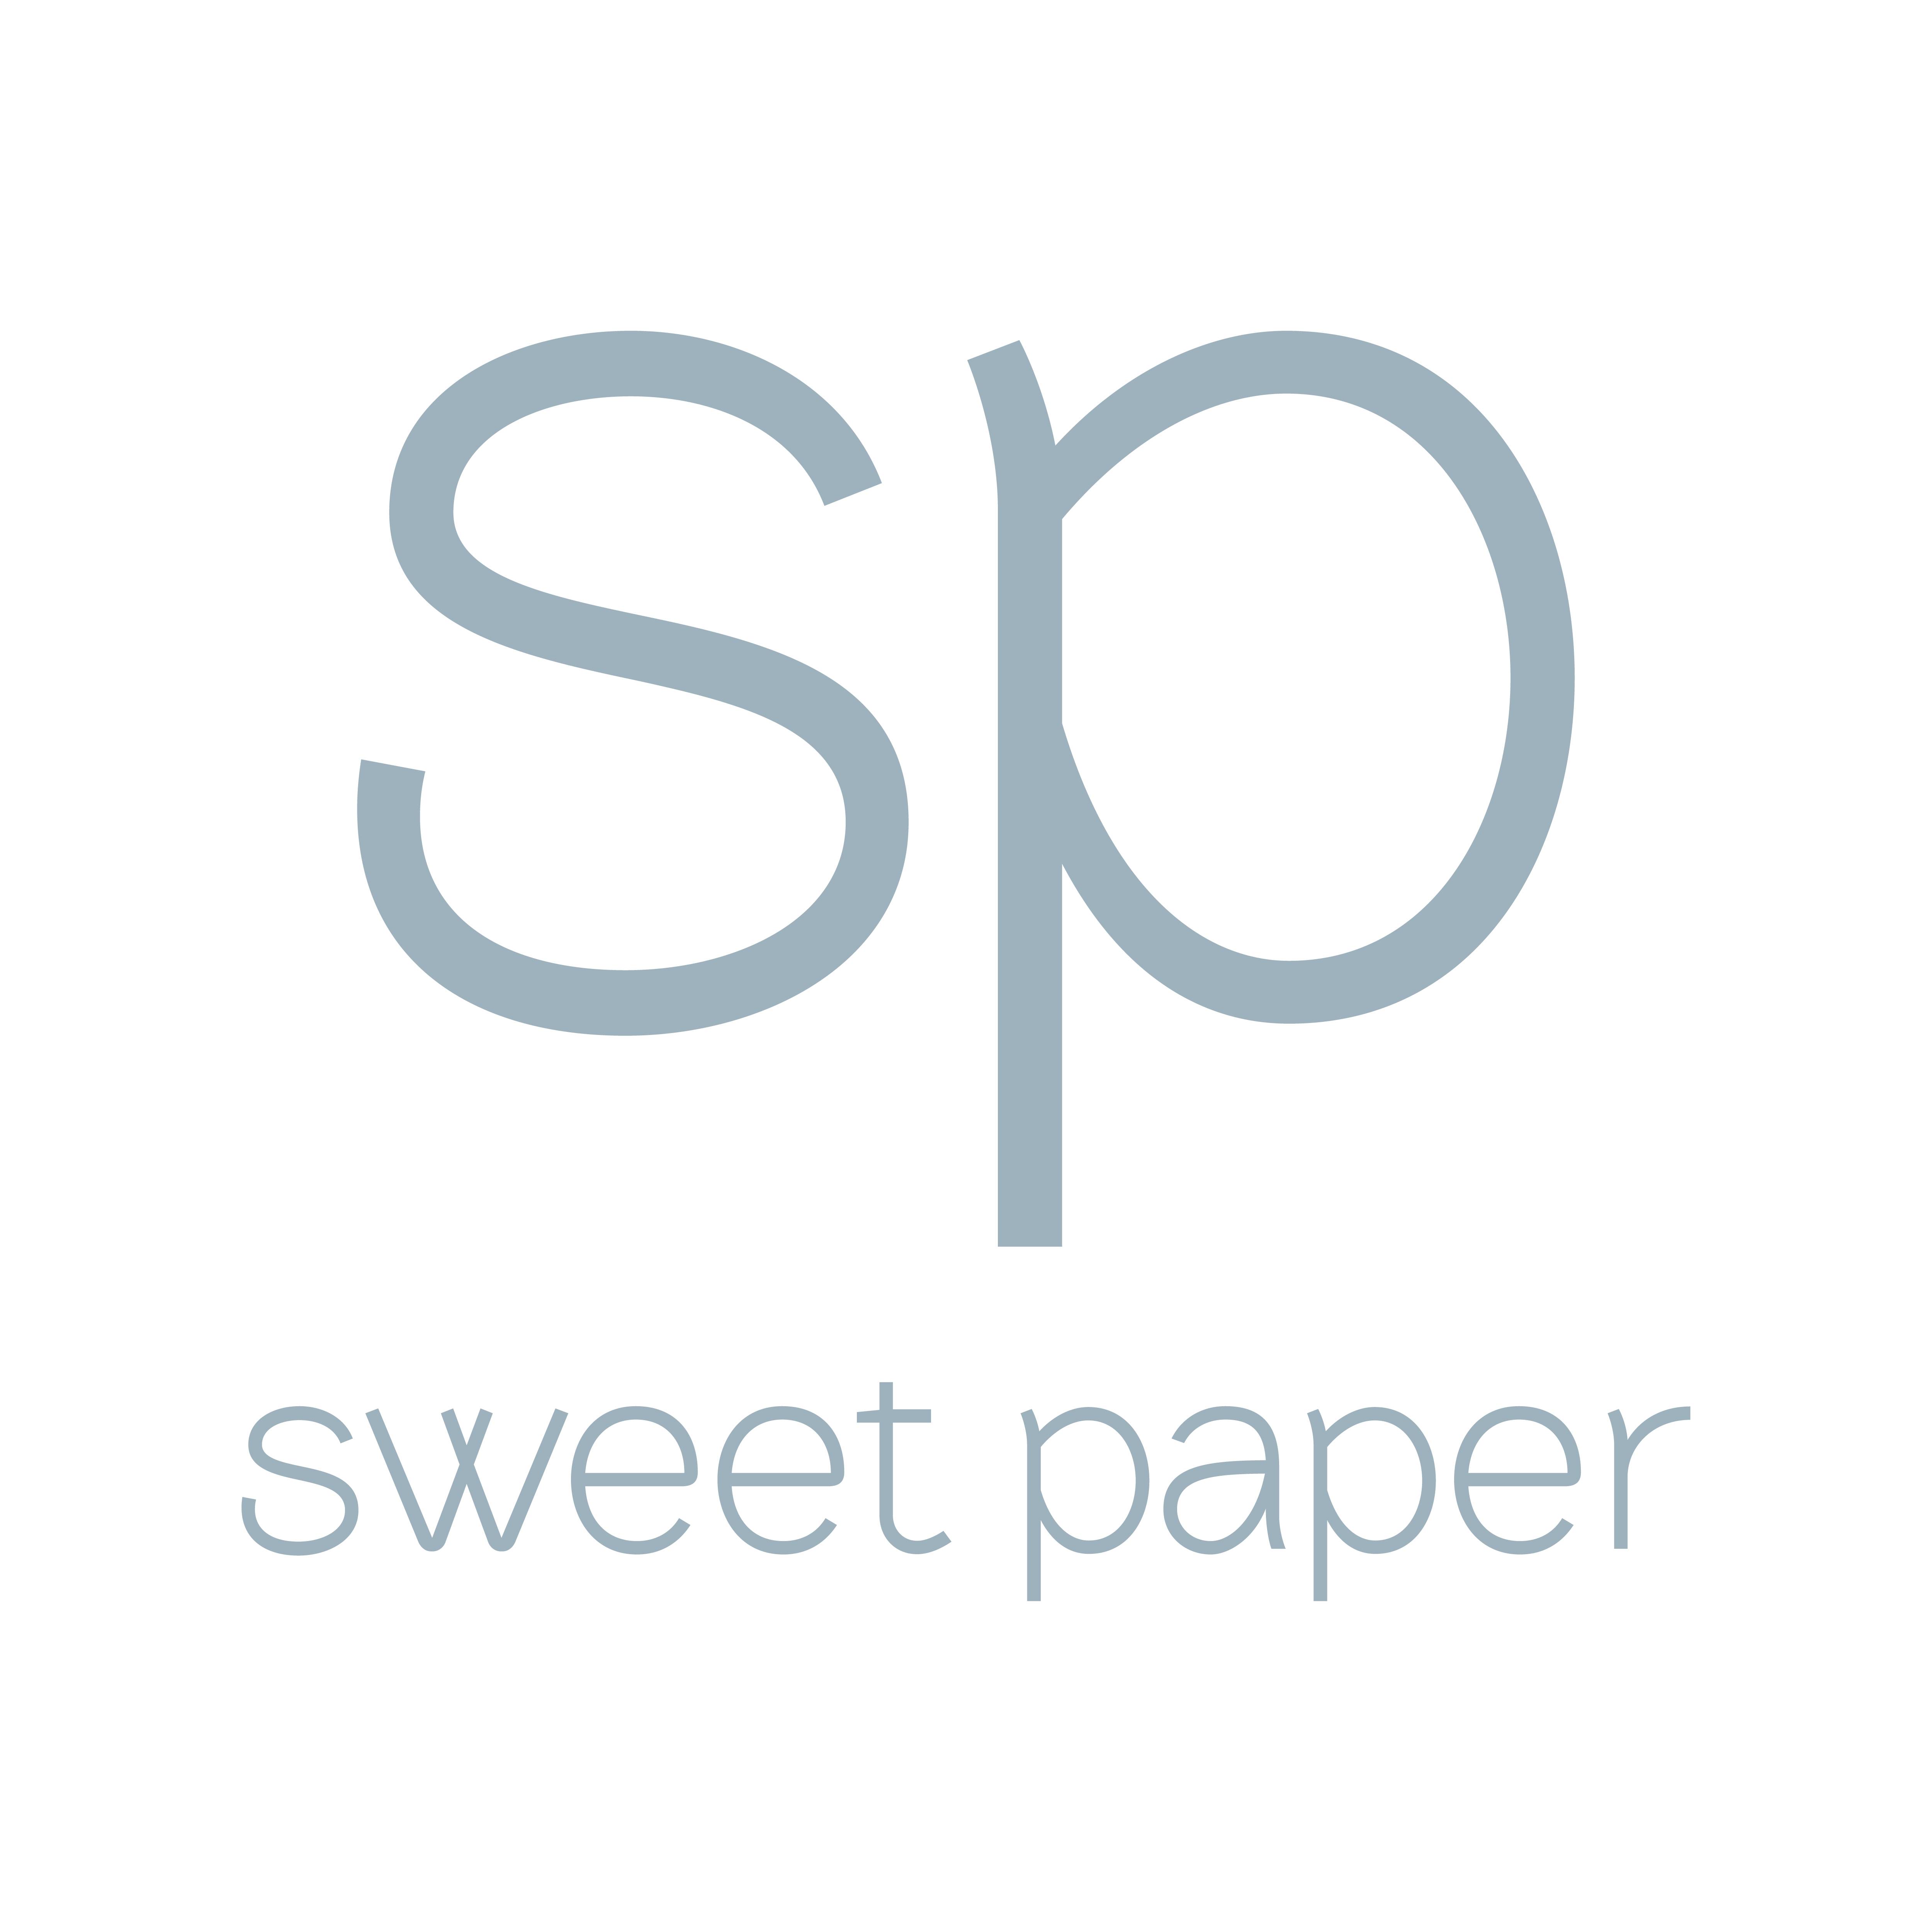 Sweet Paper